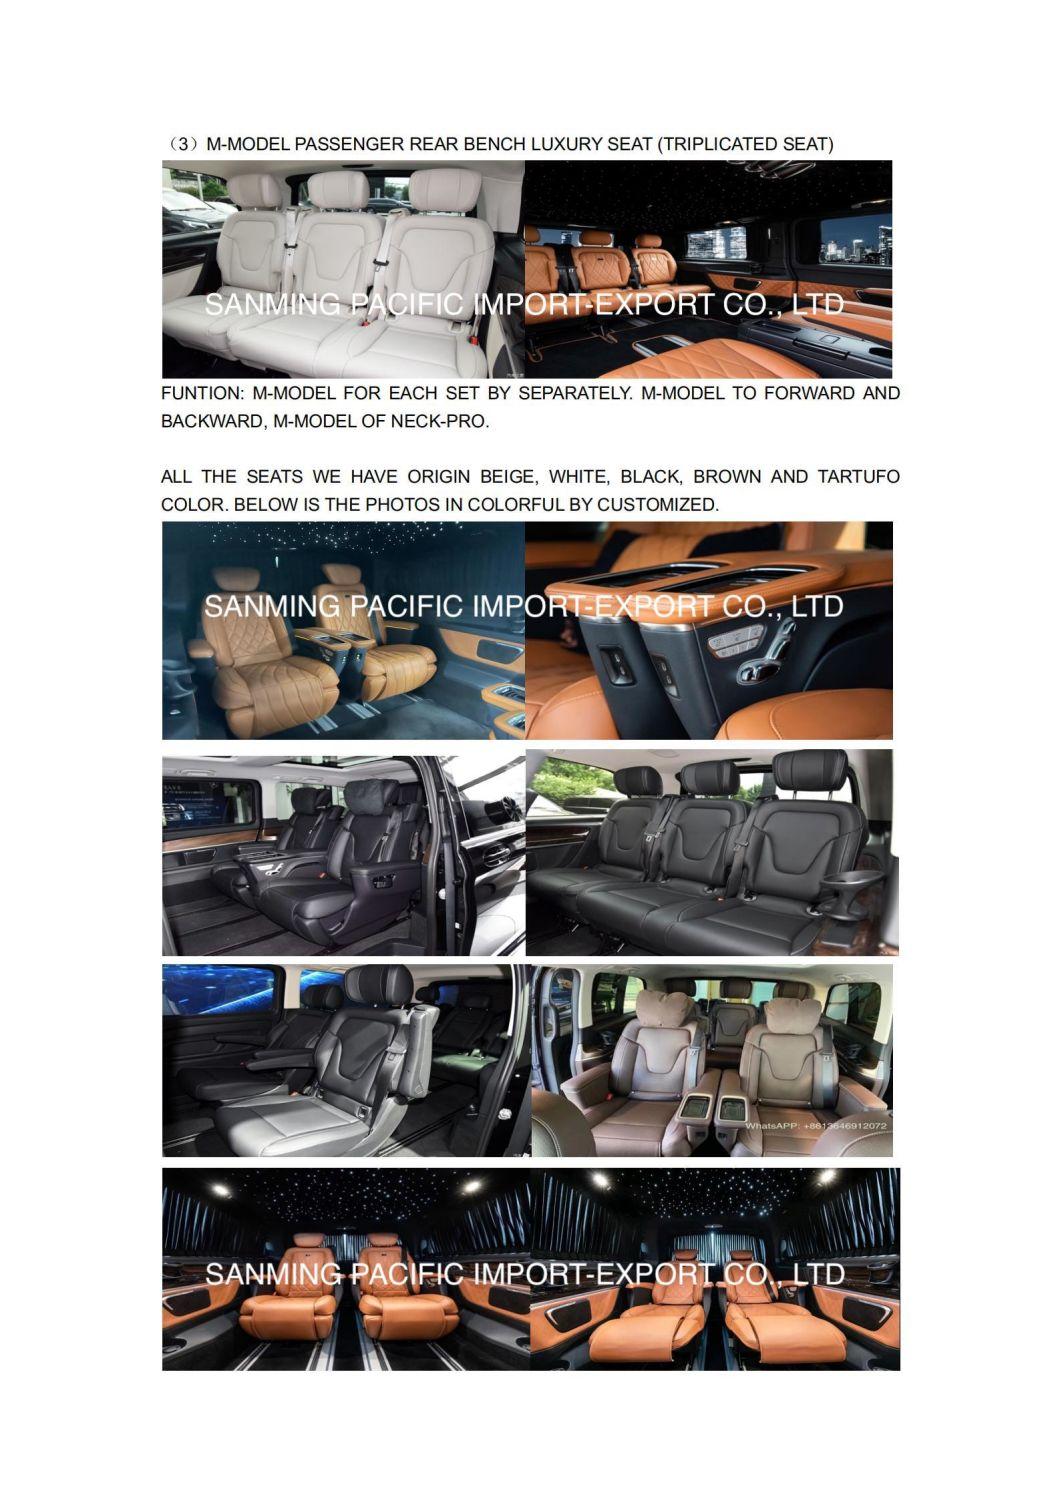 Vito V-Class Metris Sprinter Electric Luxury Tuning Seat for Retrofitting